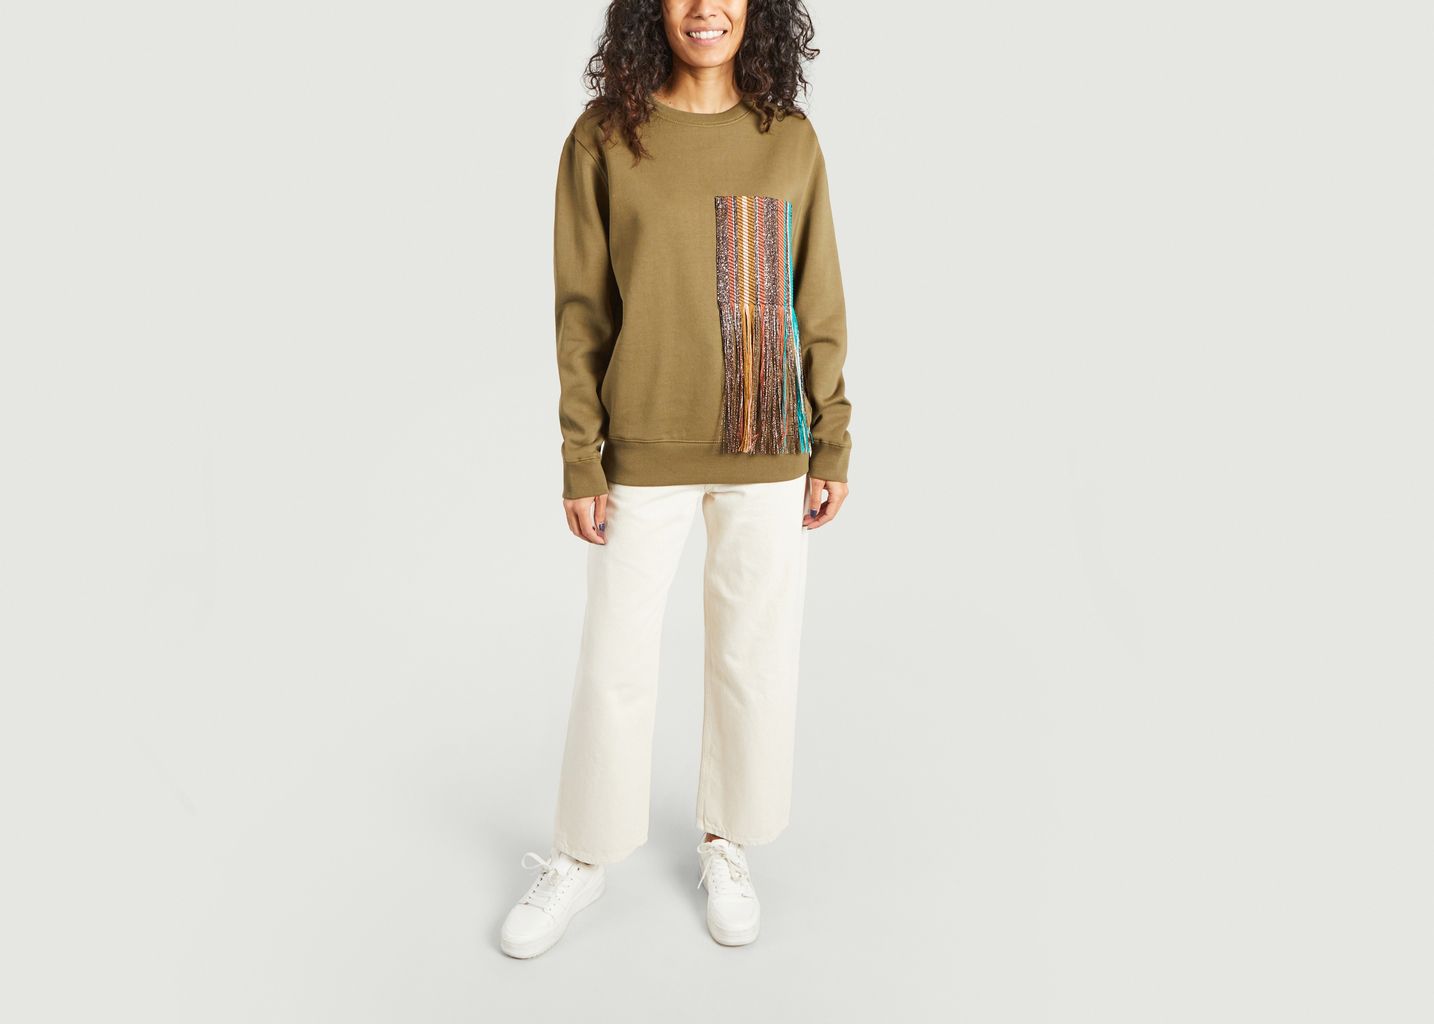 Sweatshirt The Pocket aus recycelter Baumwolle GOTS - benjamin benmoyal